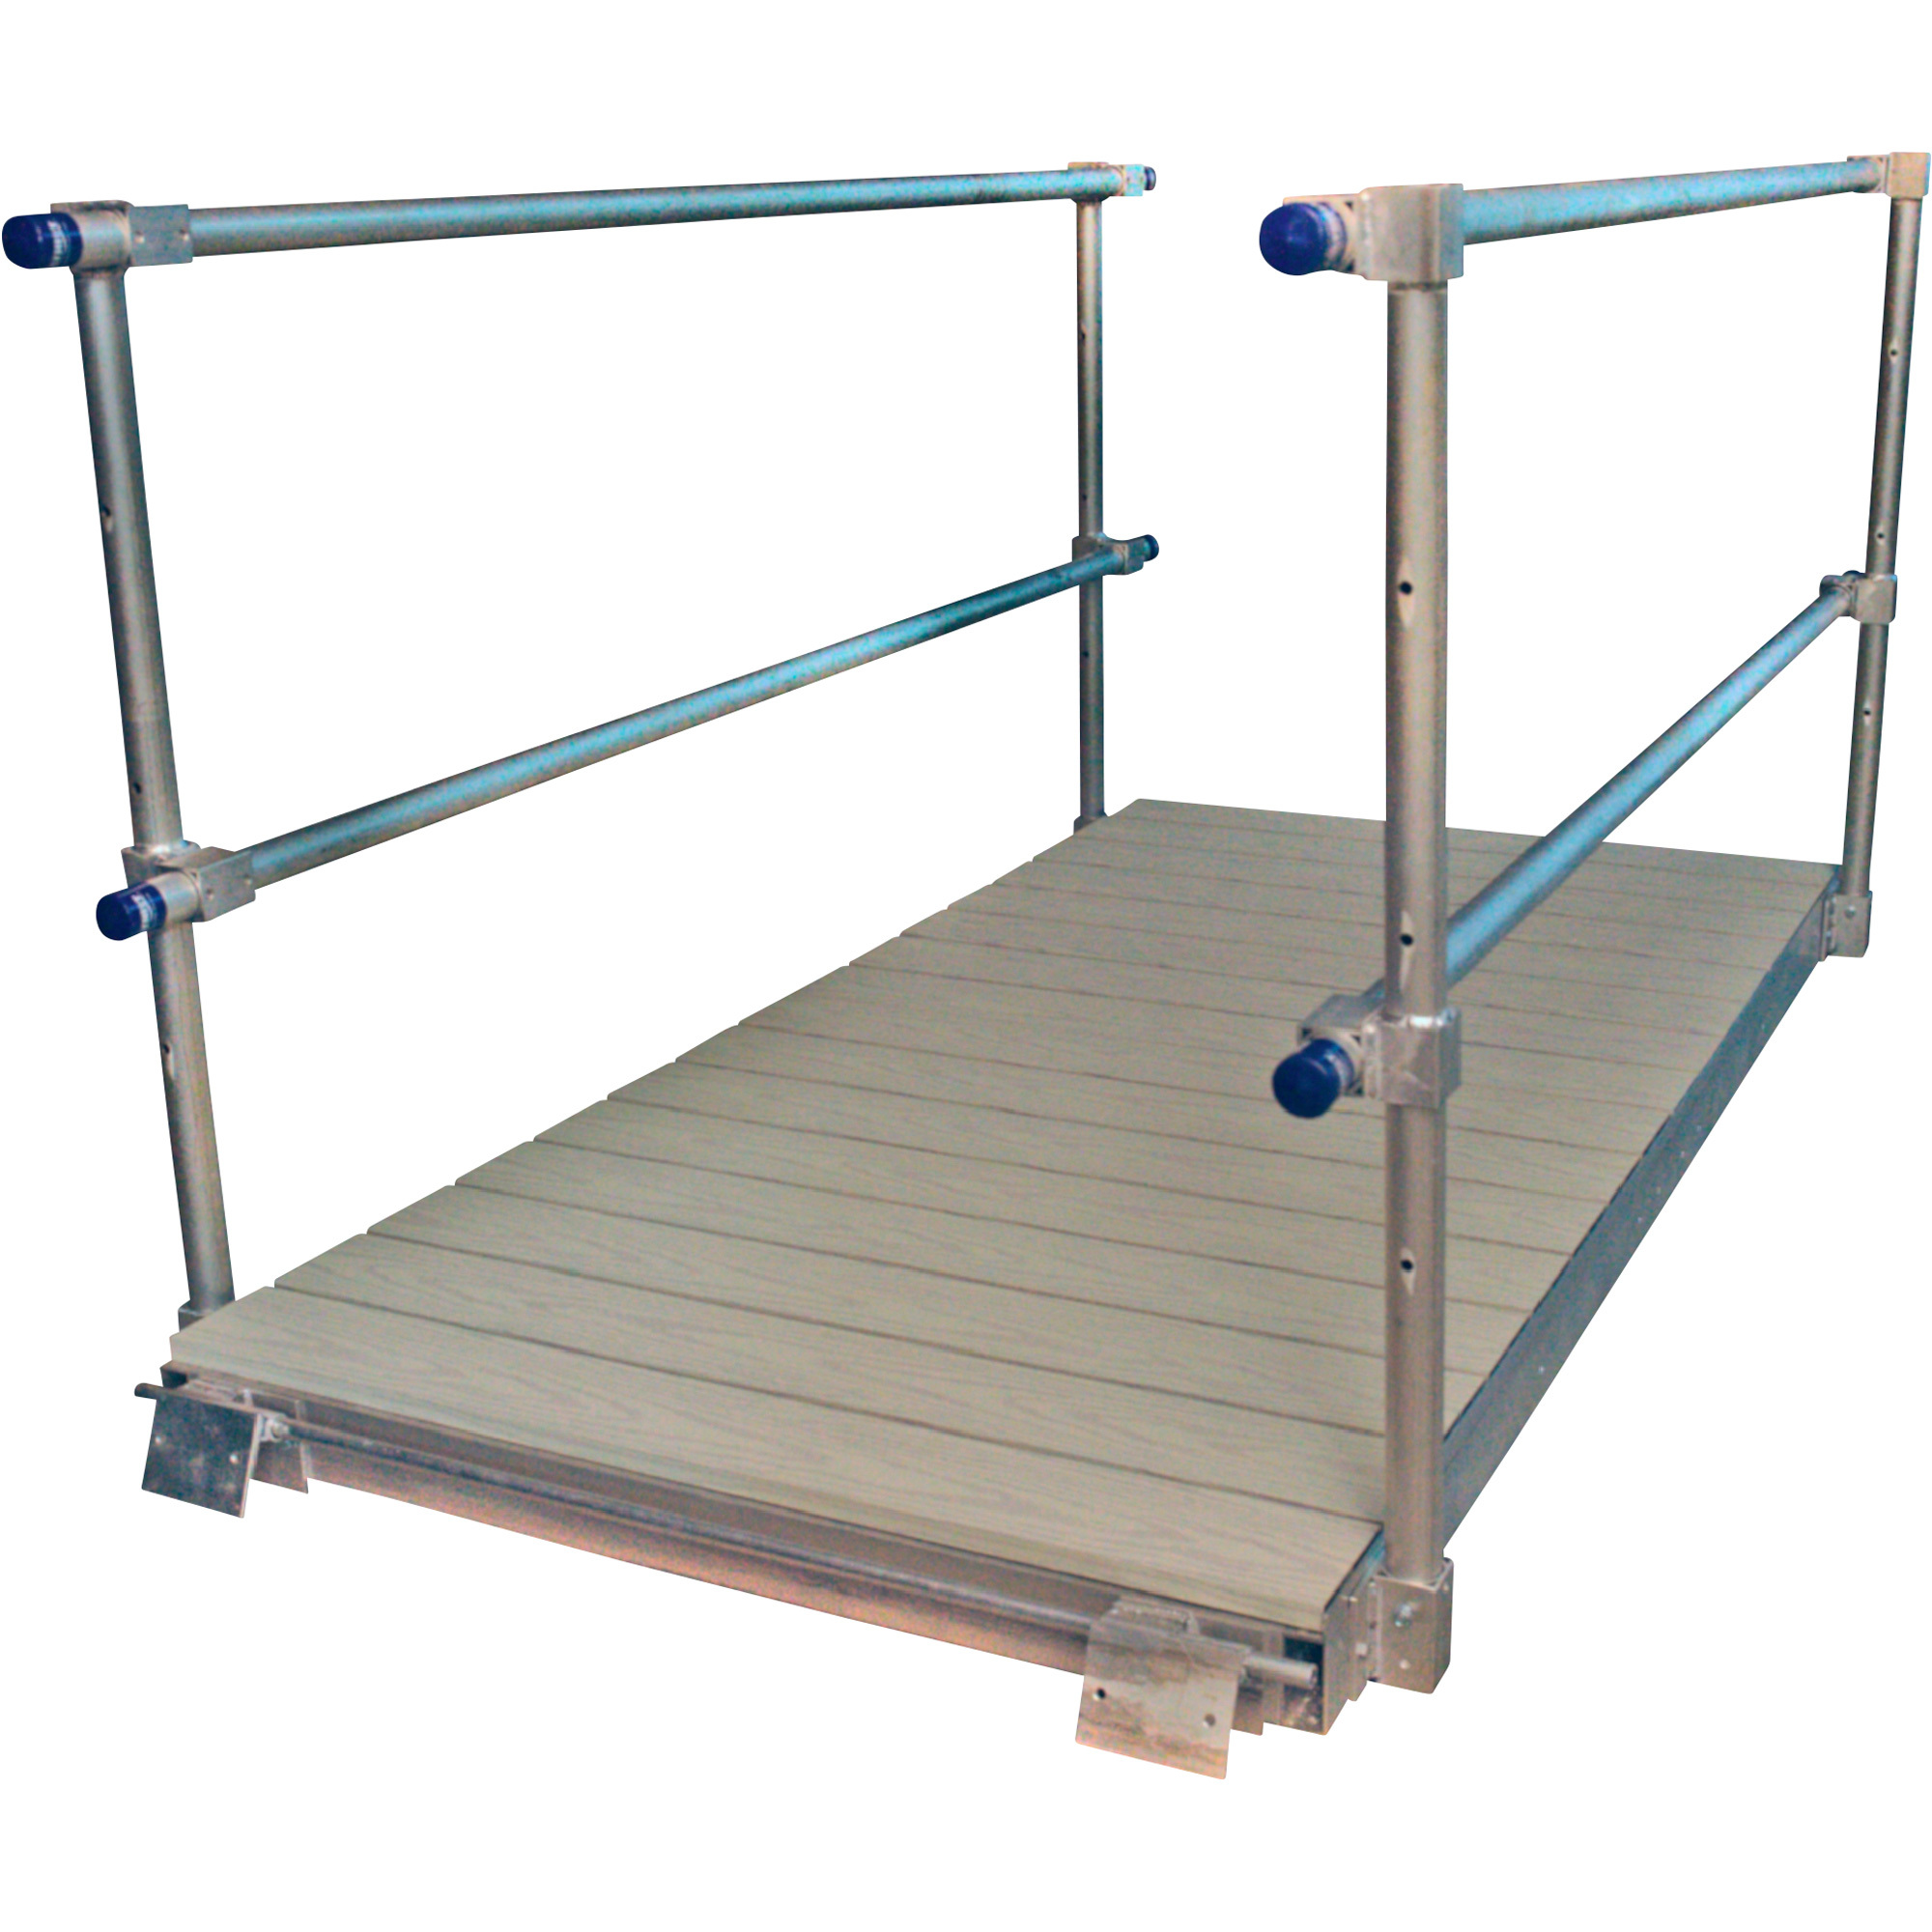 Patriot Docks Modular Aluminum Gangway Kit â Brown Aluminum Deck, 4ft.W x 8ft.L, Model 10363